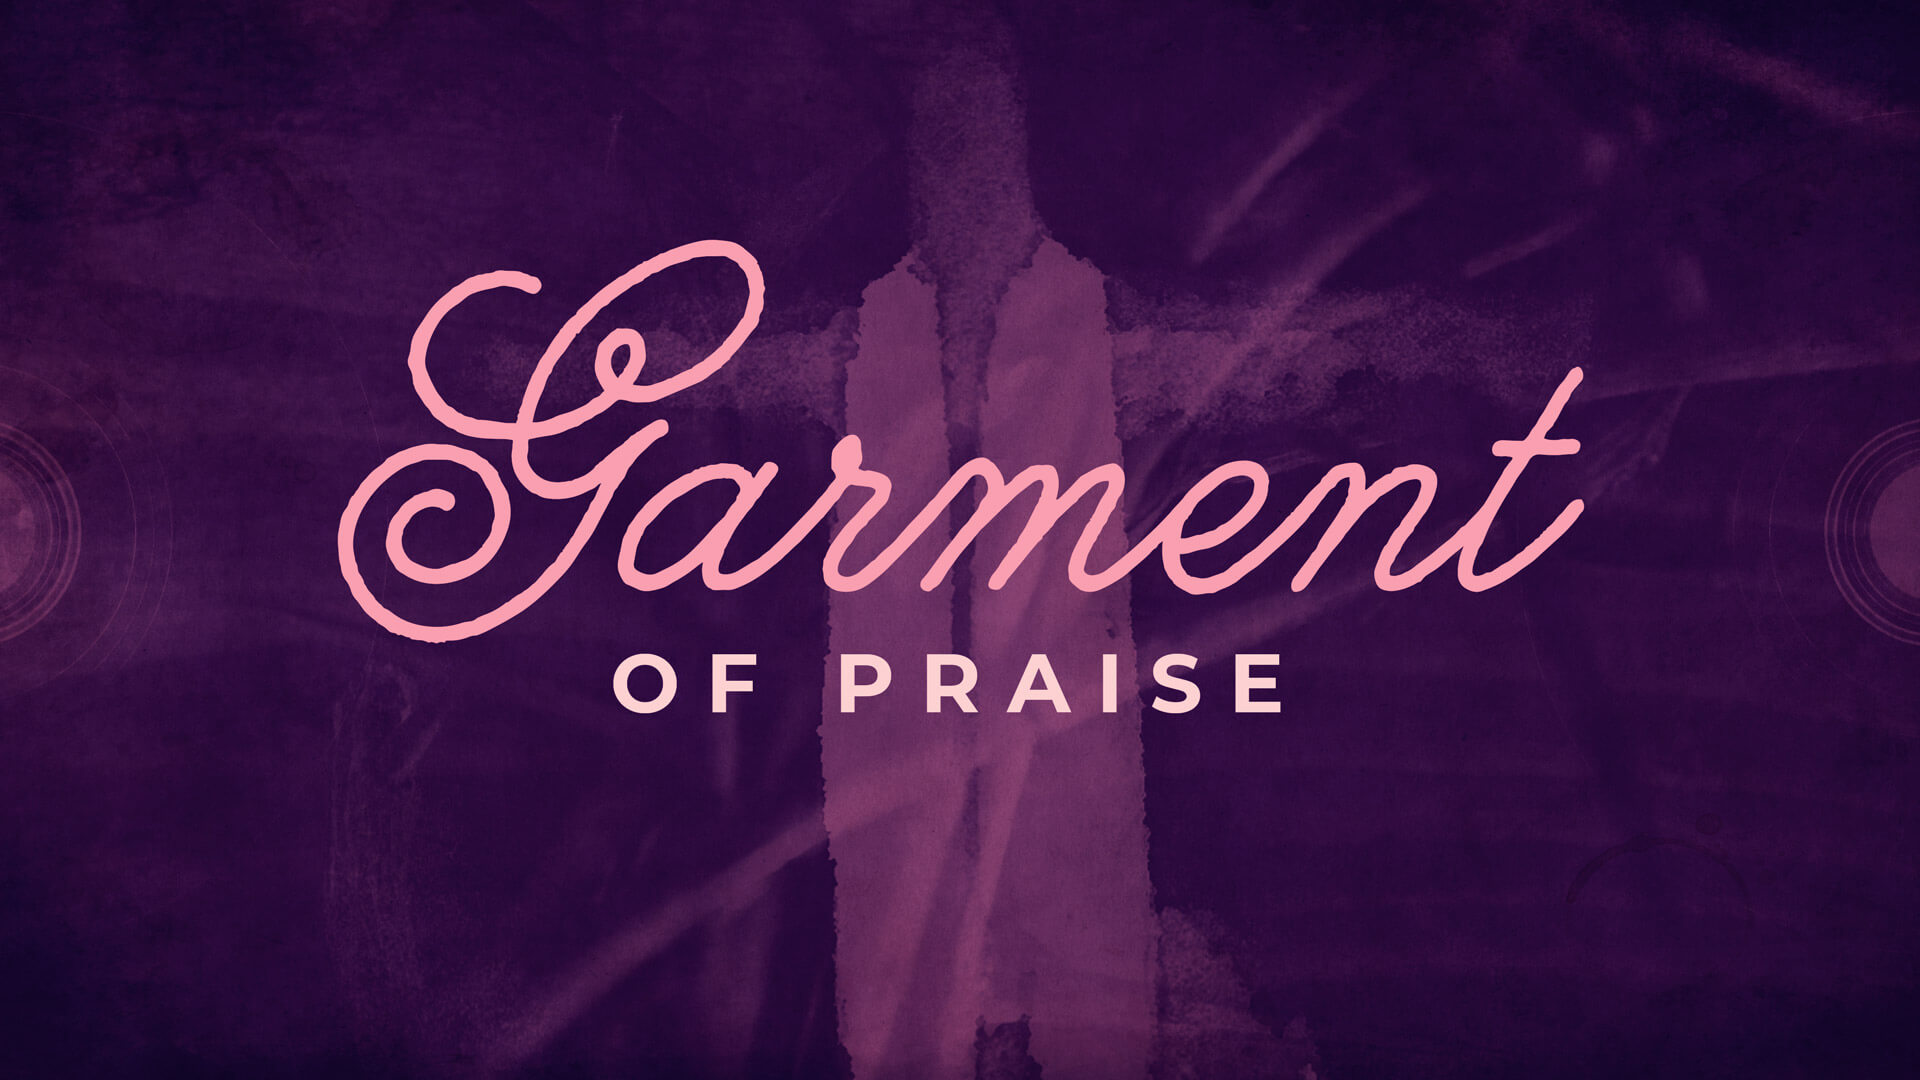 The garment of praise